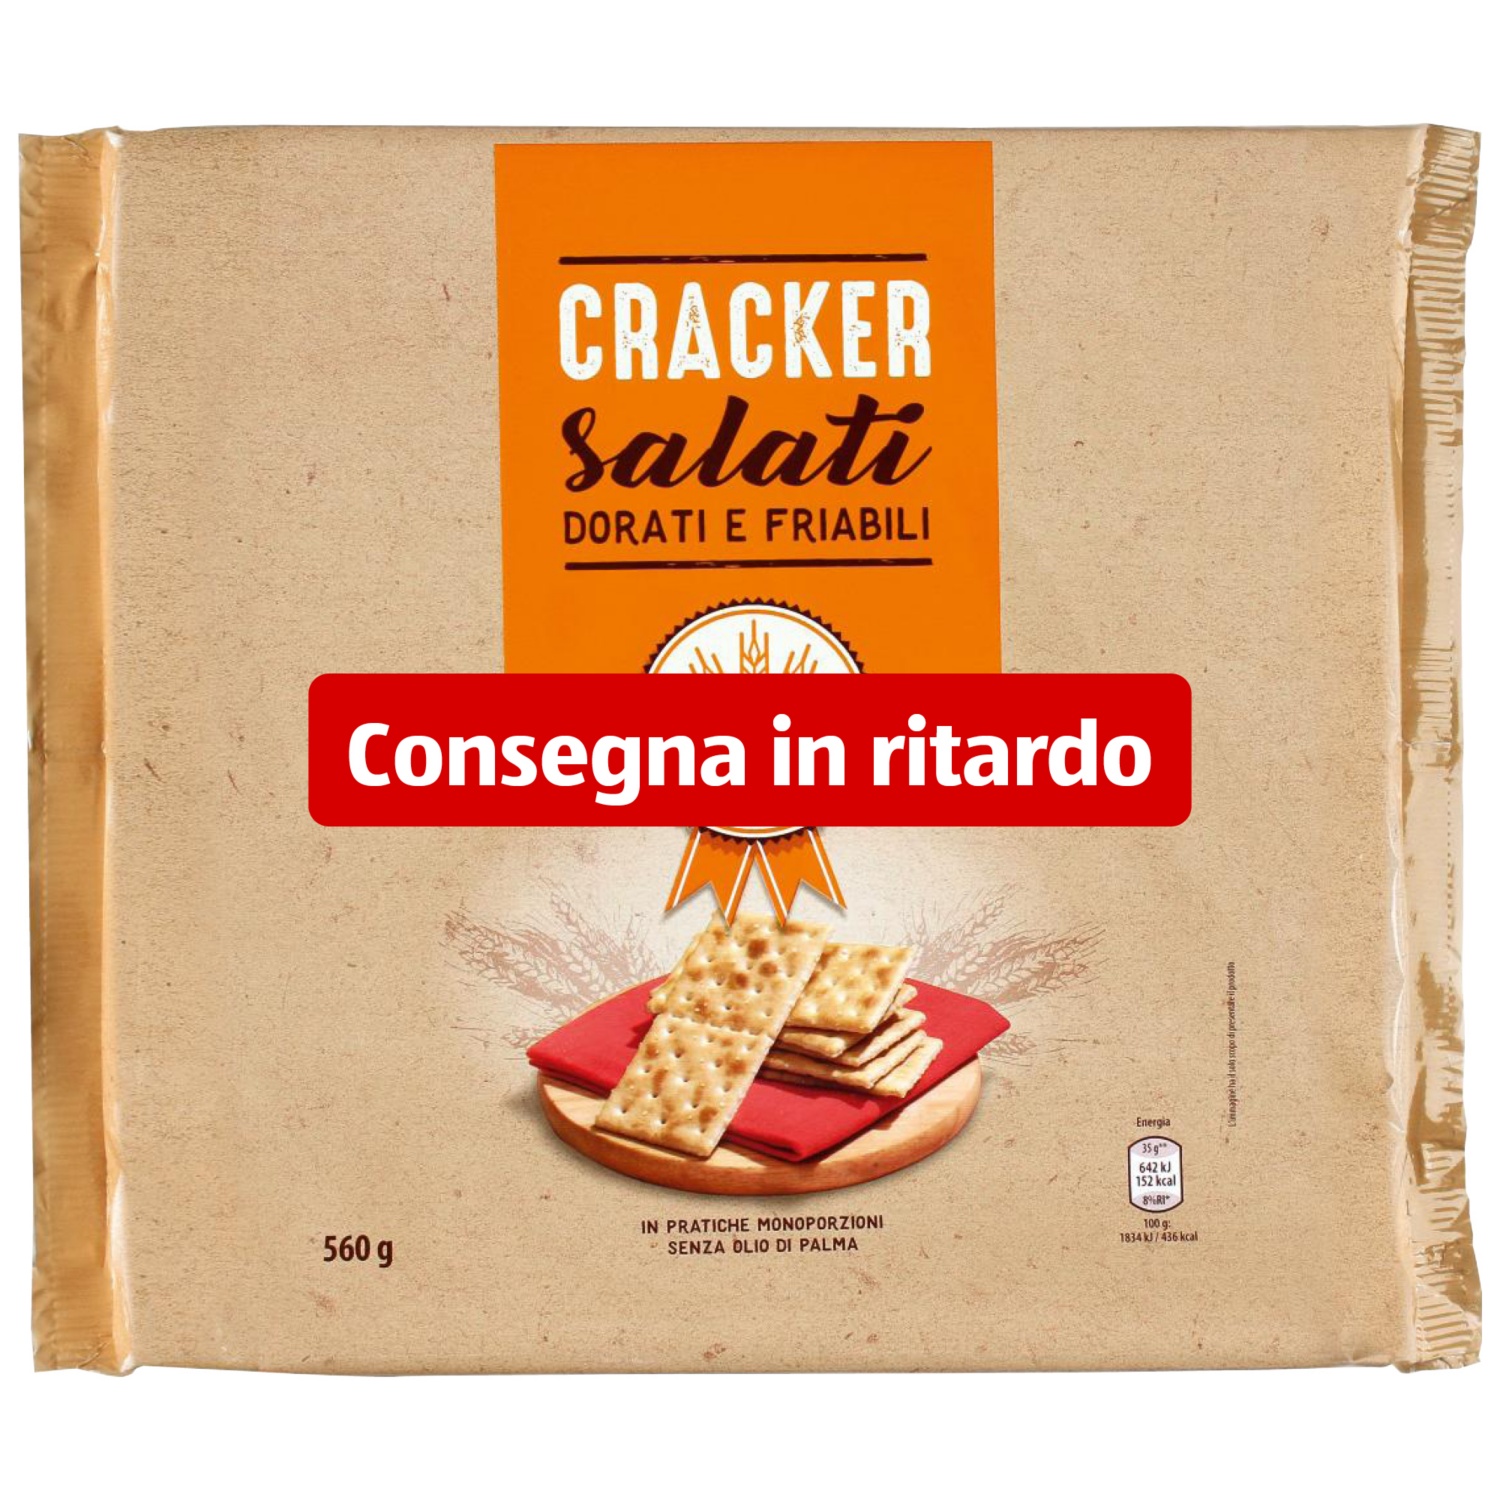 LA CESTA Crackers salati